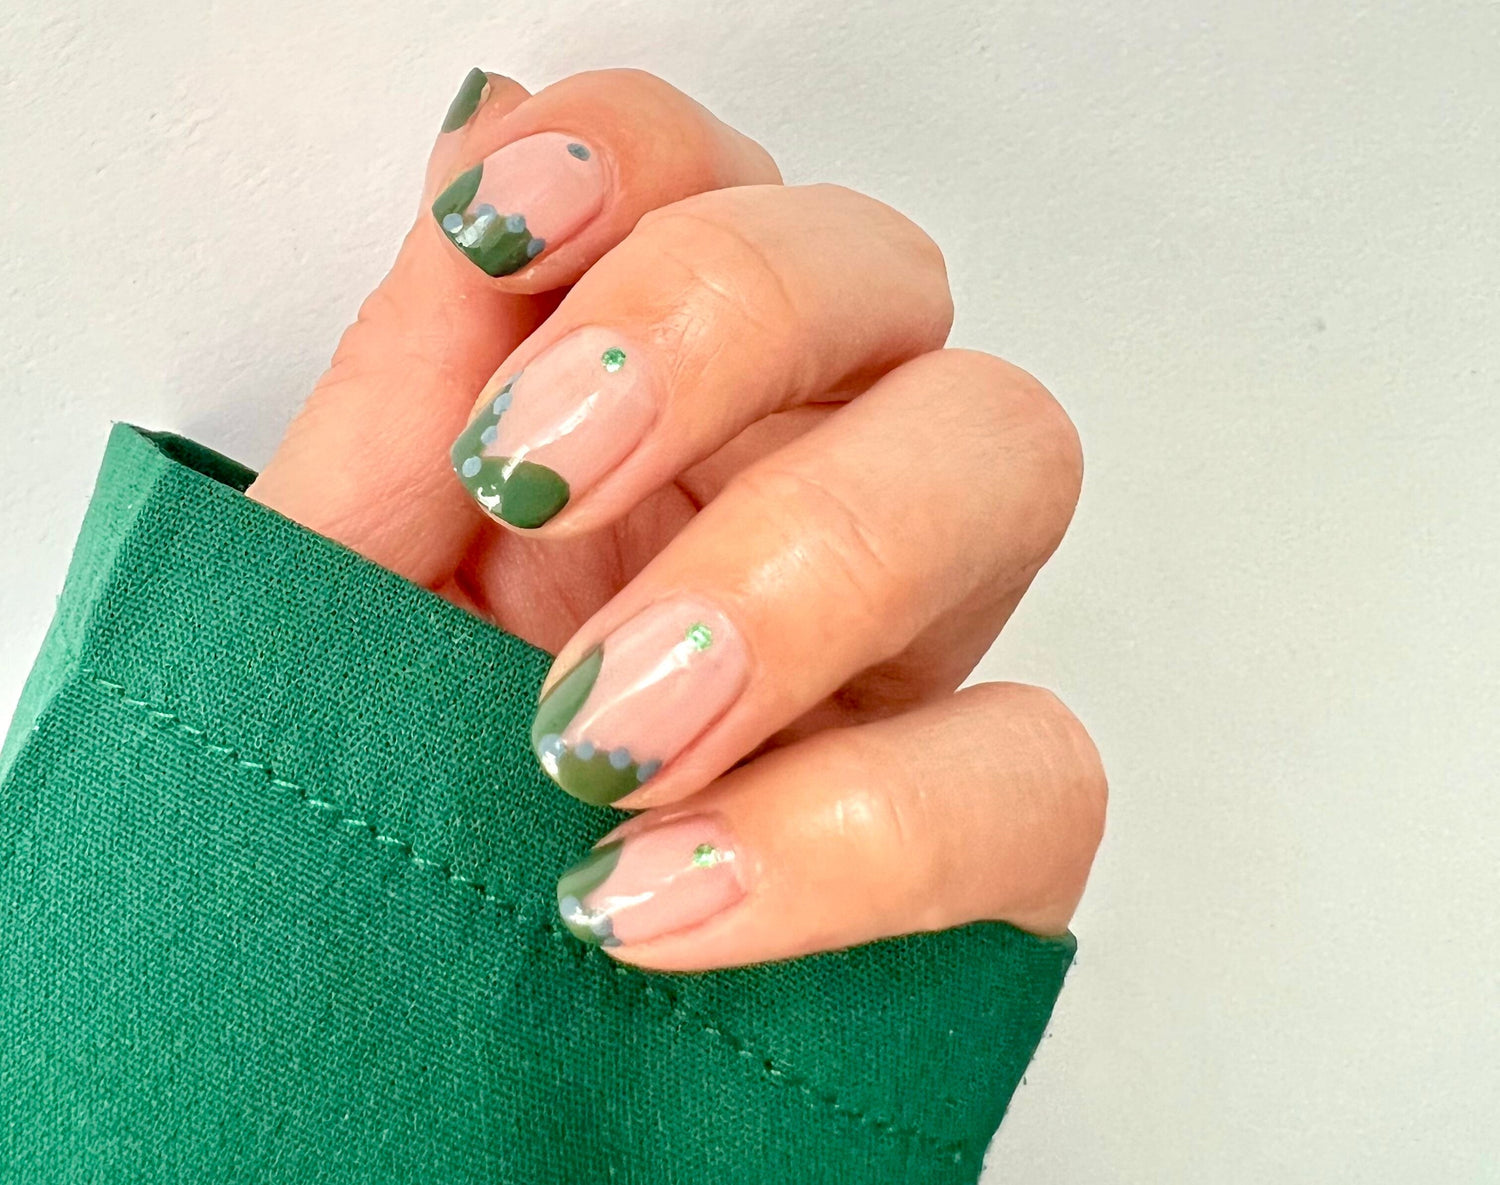 Easy winter nail art | At-home winter nail looks we love